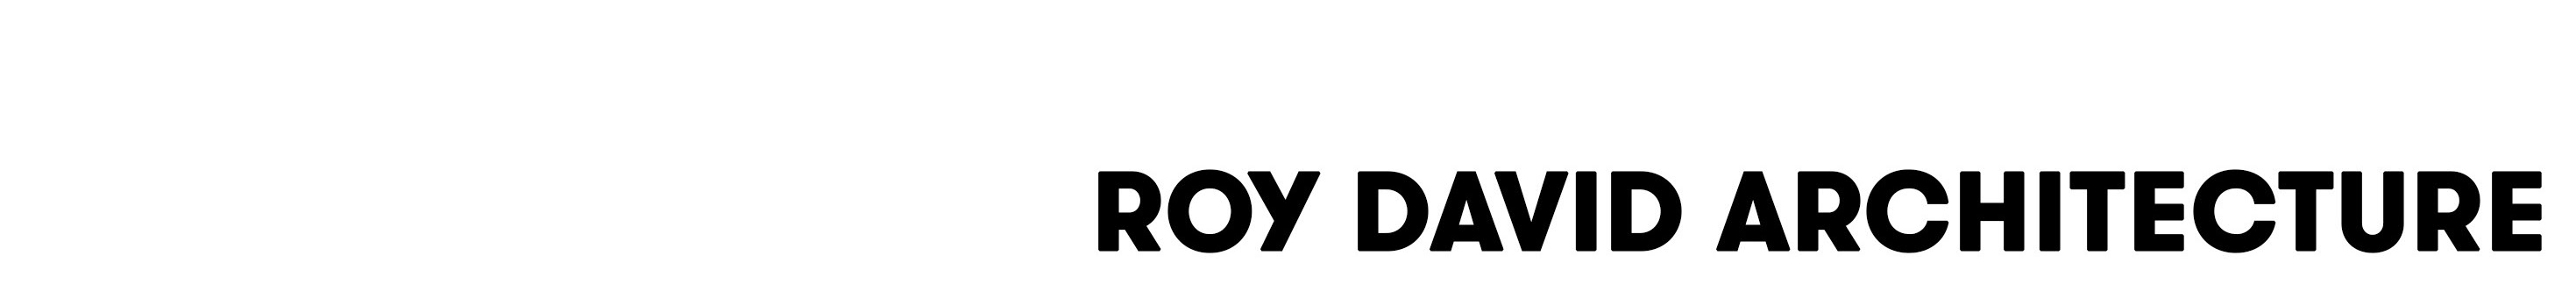 ROY DAVID's profile banner